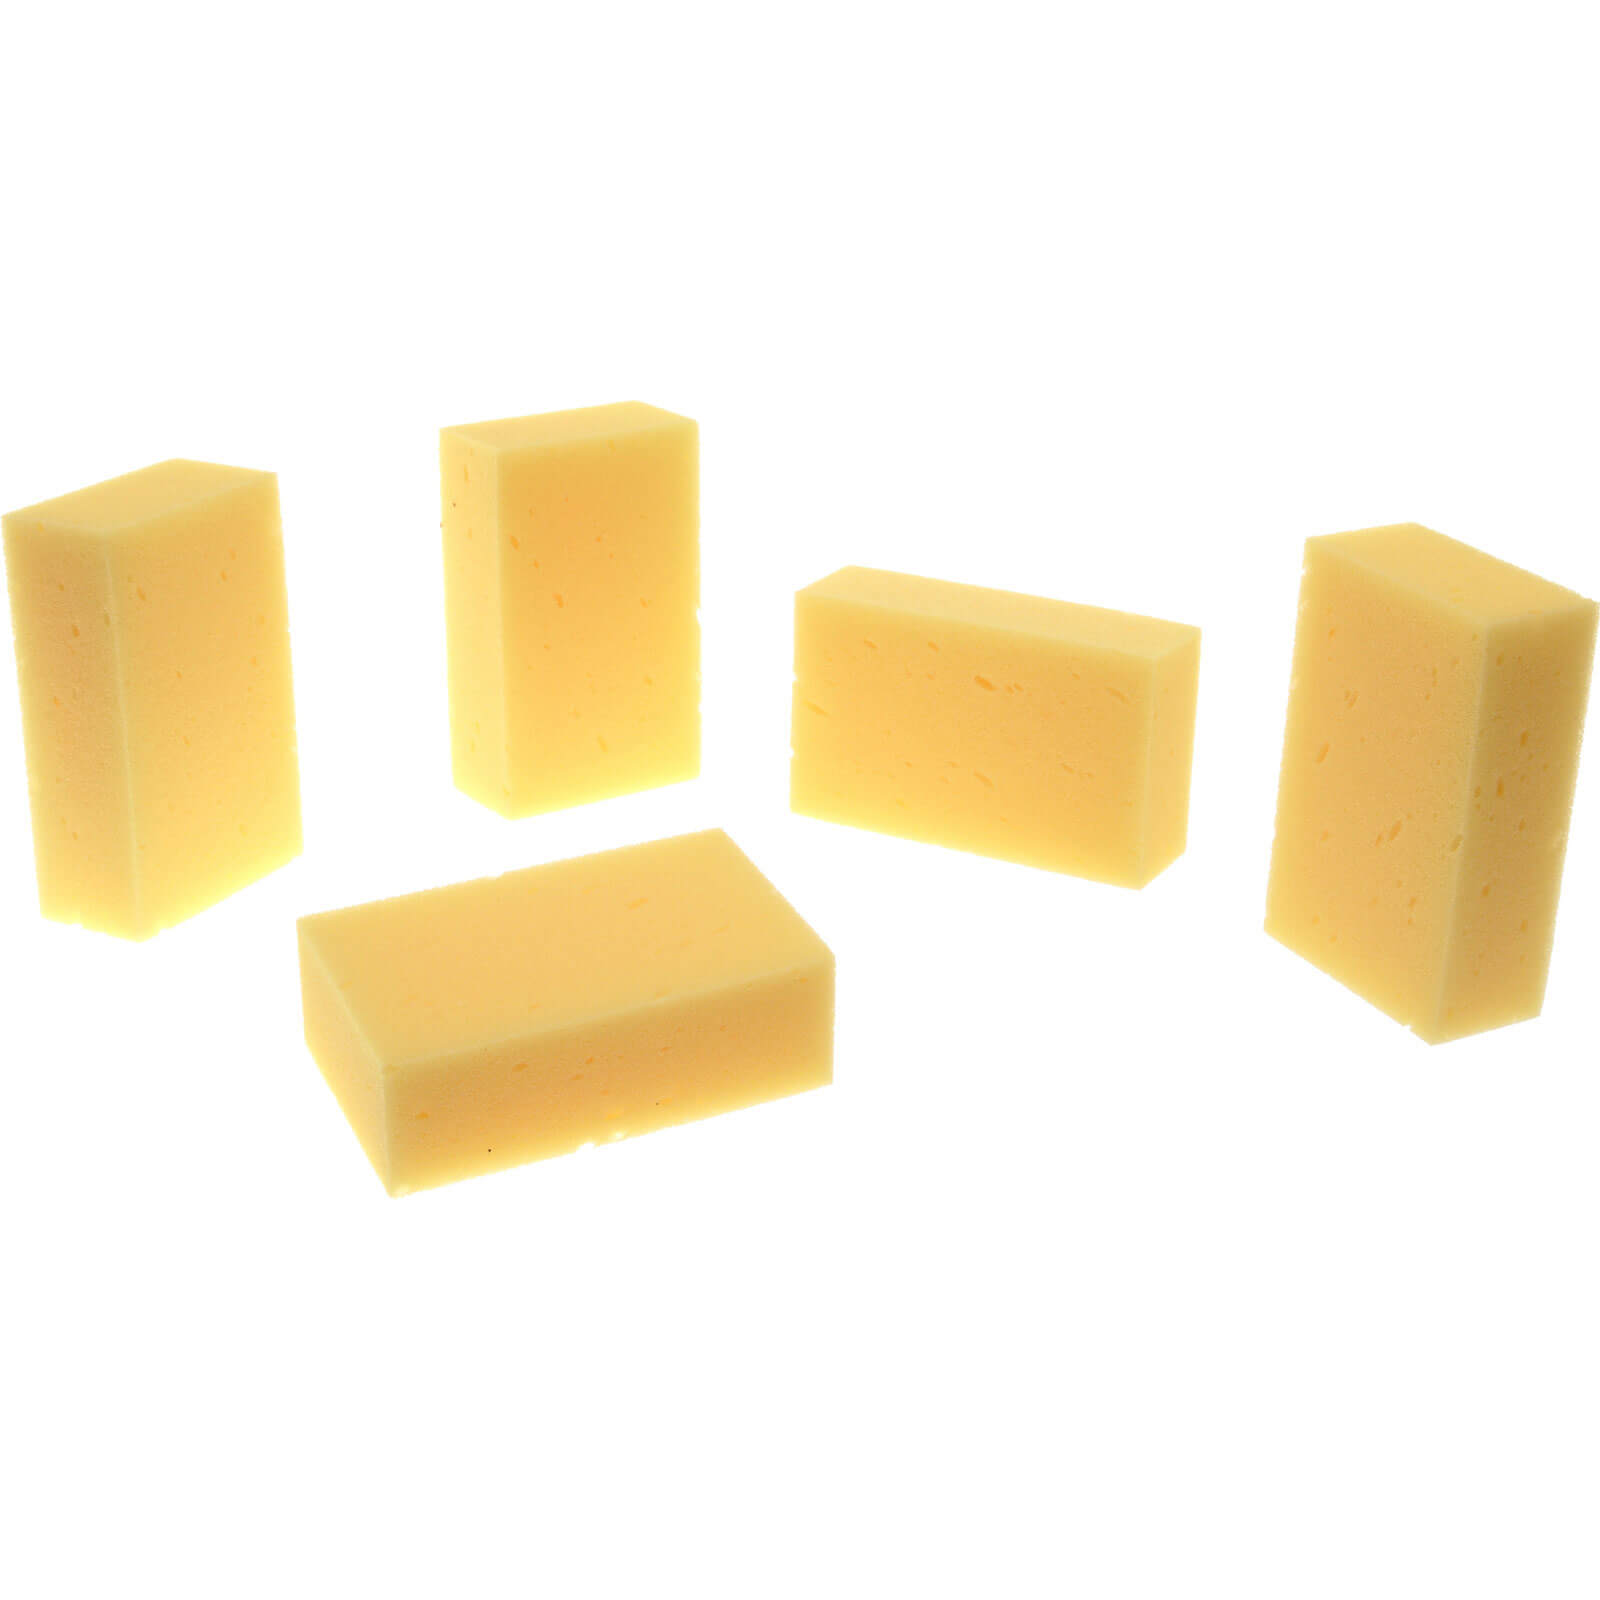 Photo of U-care Handy Sponges Pack Of 5